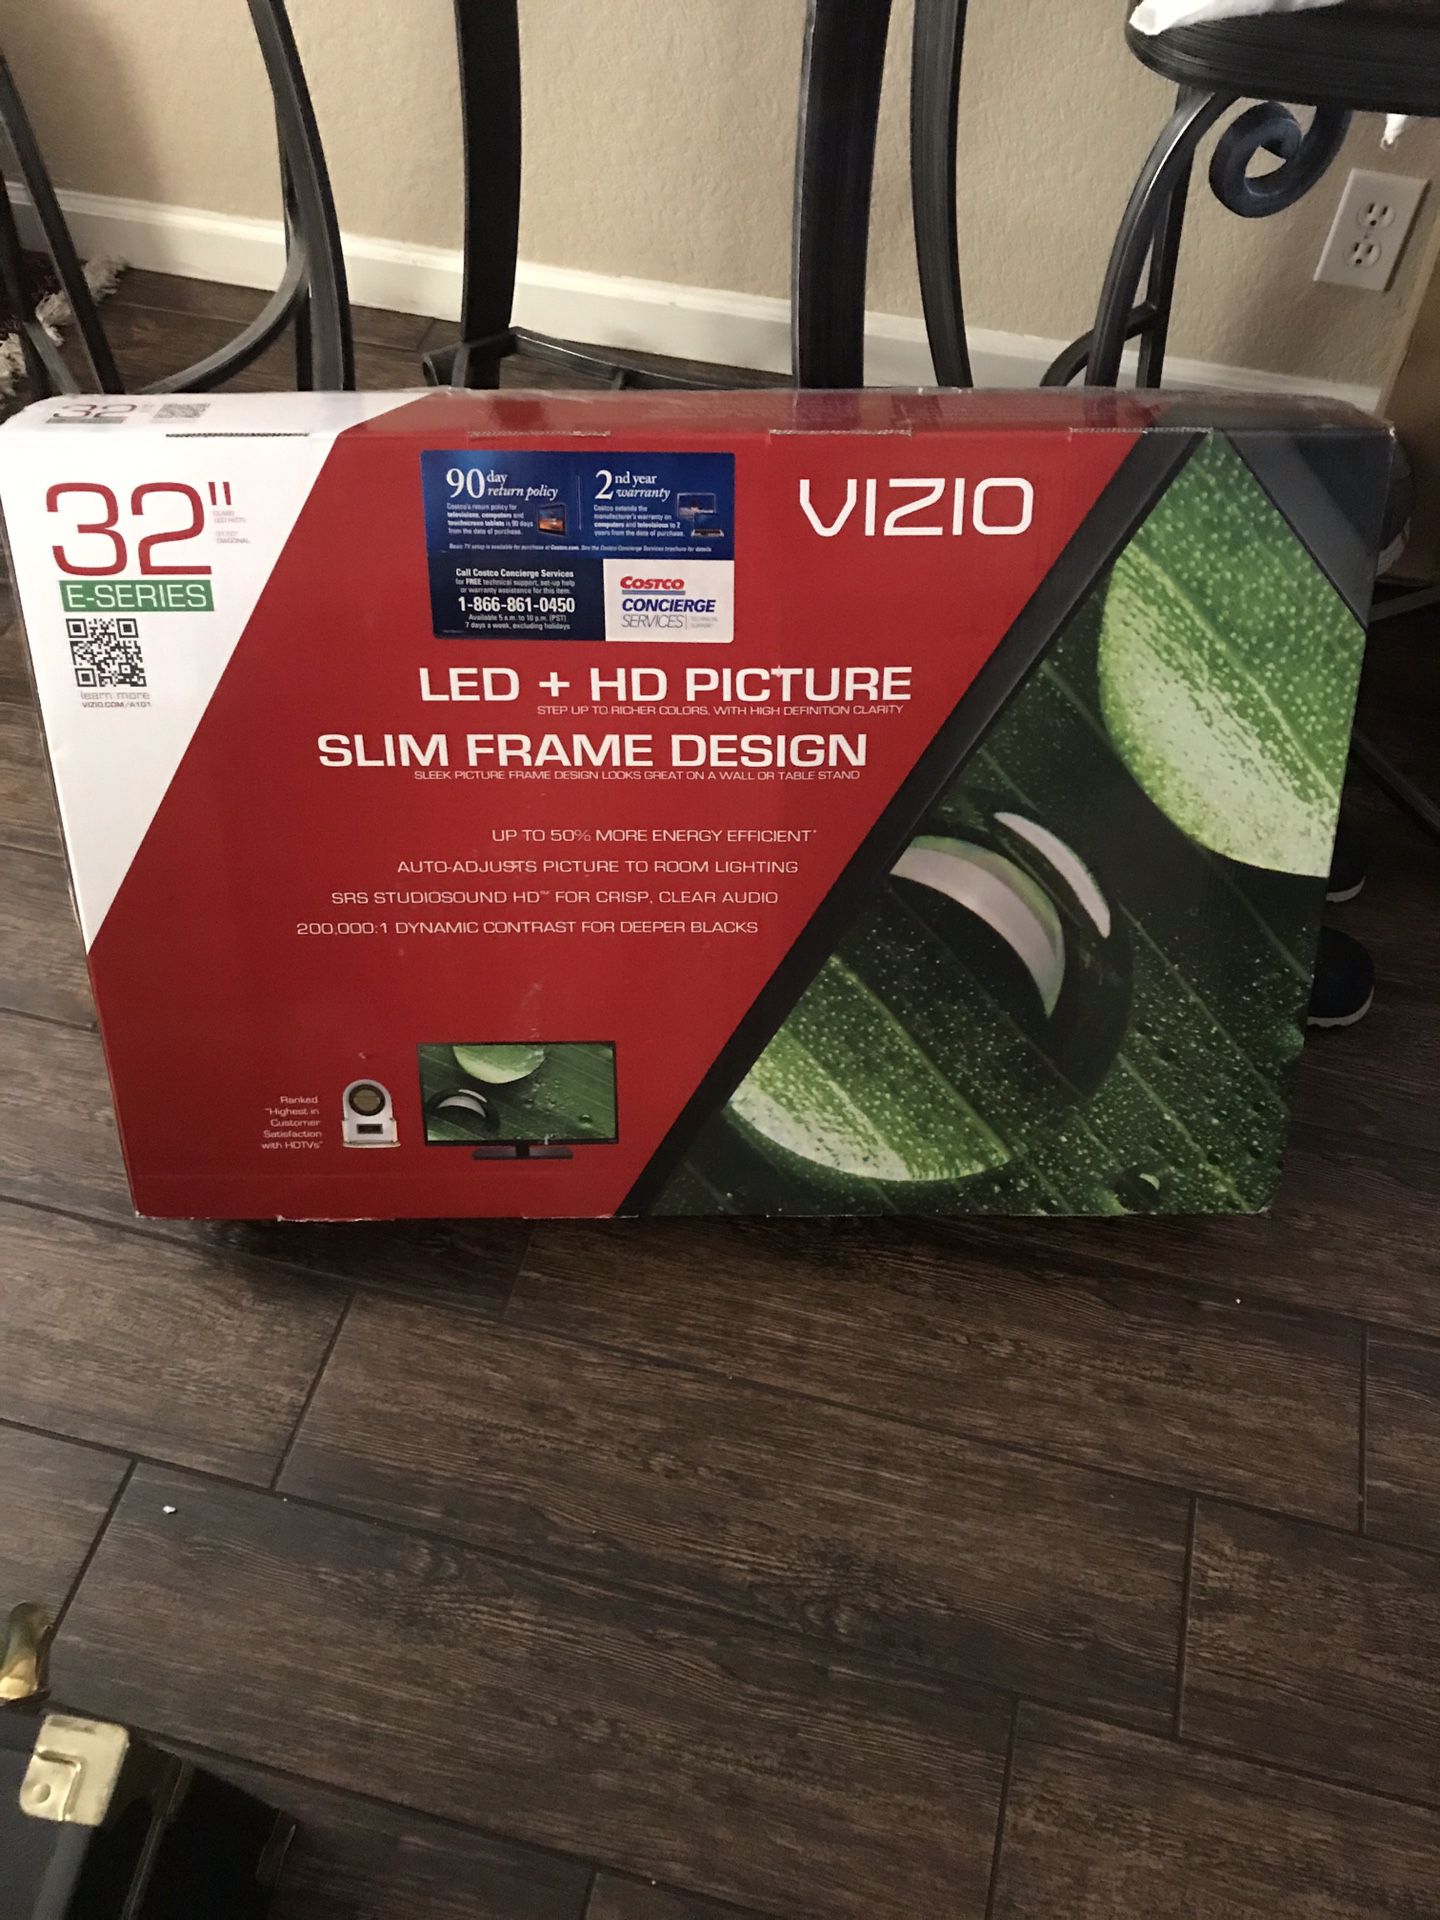 Vizio 32” LED & HD TV